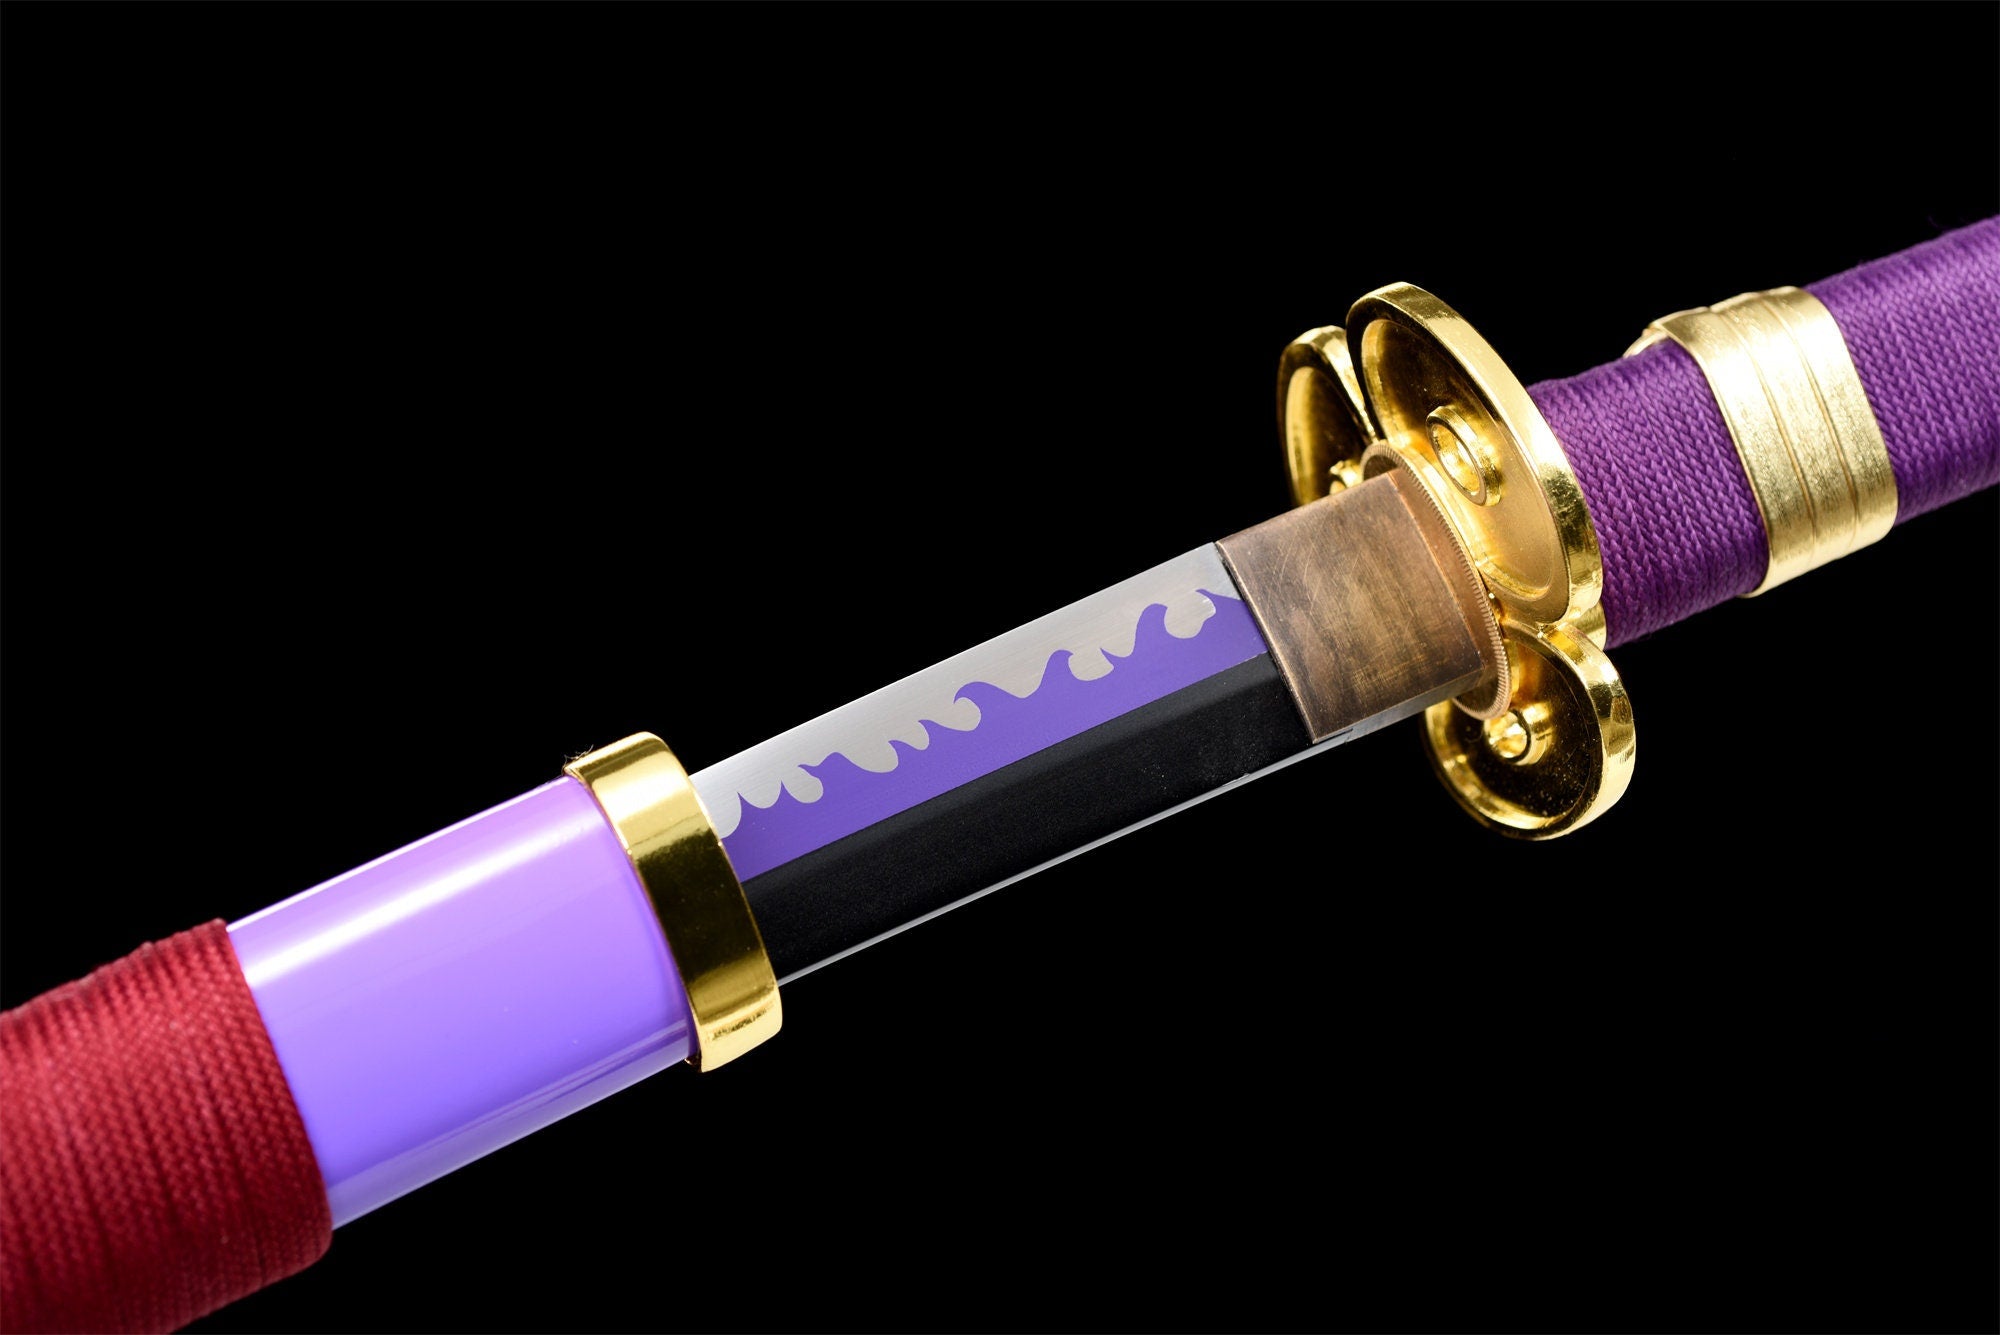 Purple Anime Sword,One Piece,Anime Cosplay,Japanese Samurai Sword,Real Handmade anime Katana,High-carbon steel,Full Tang